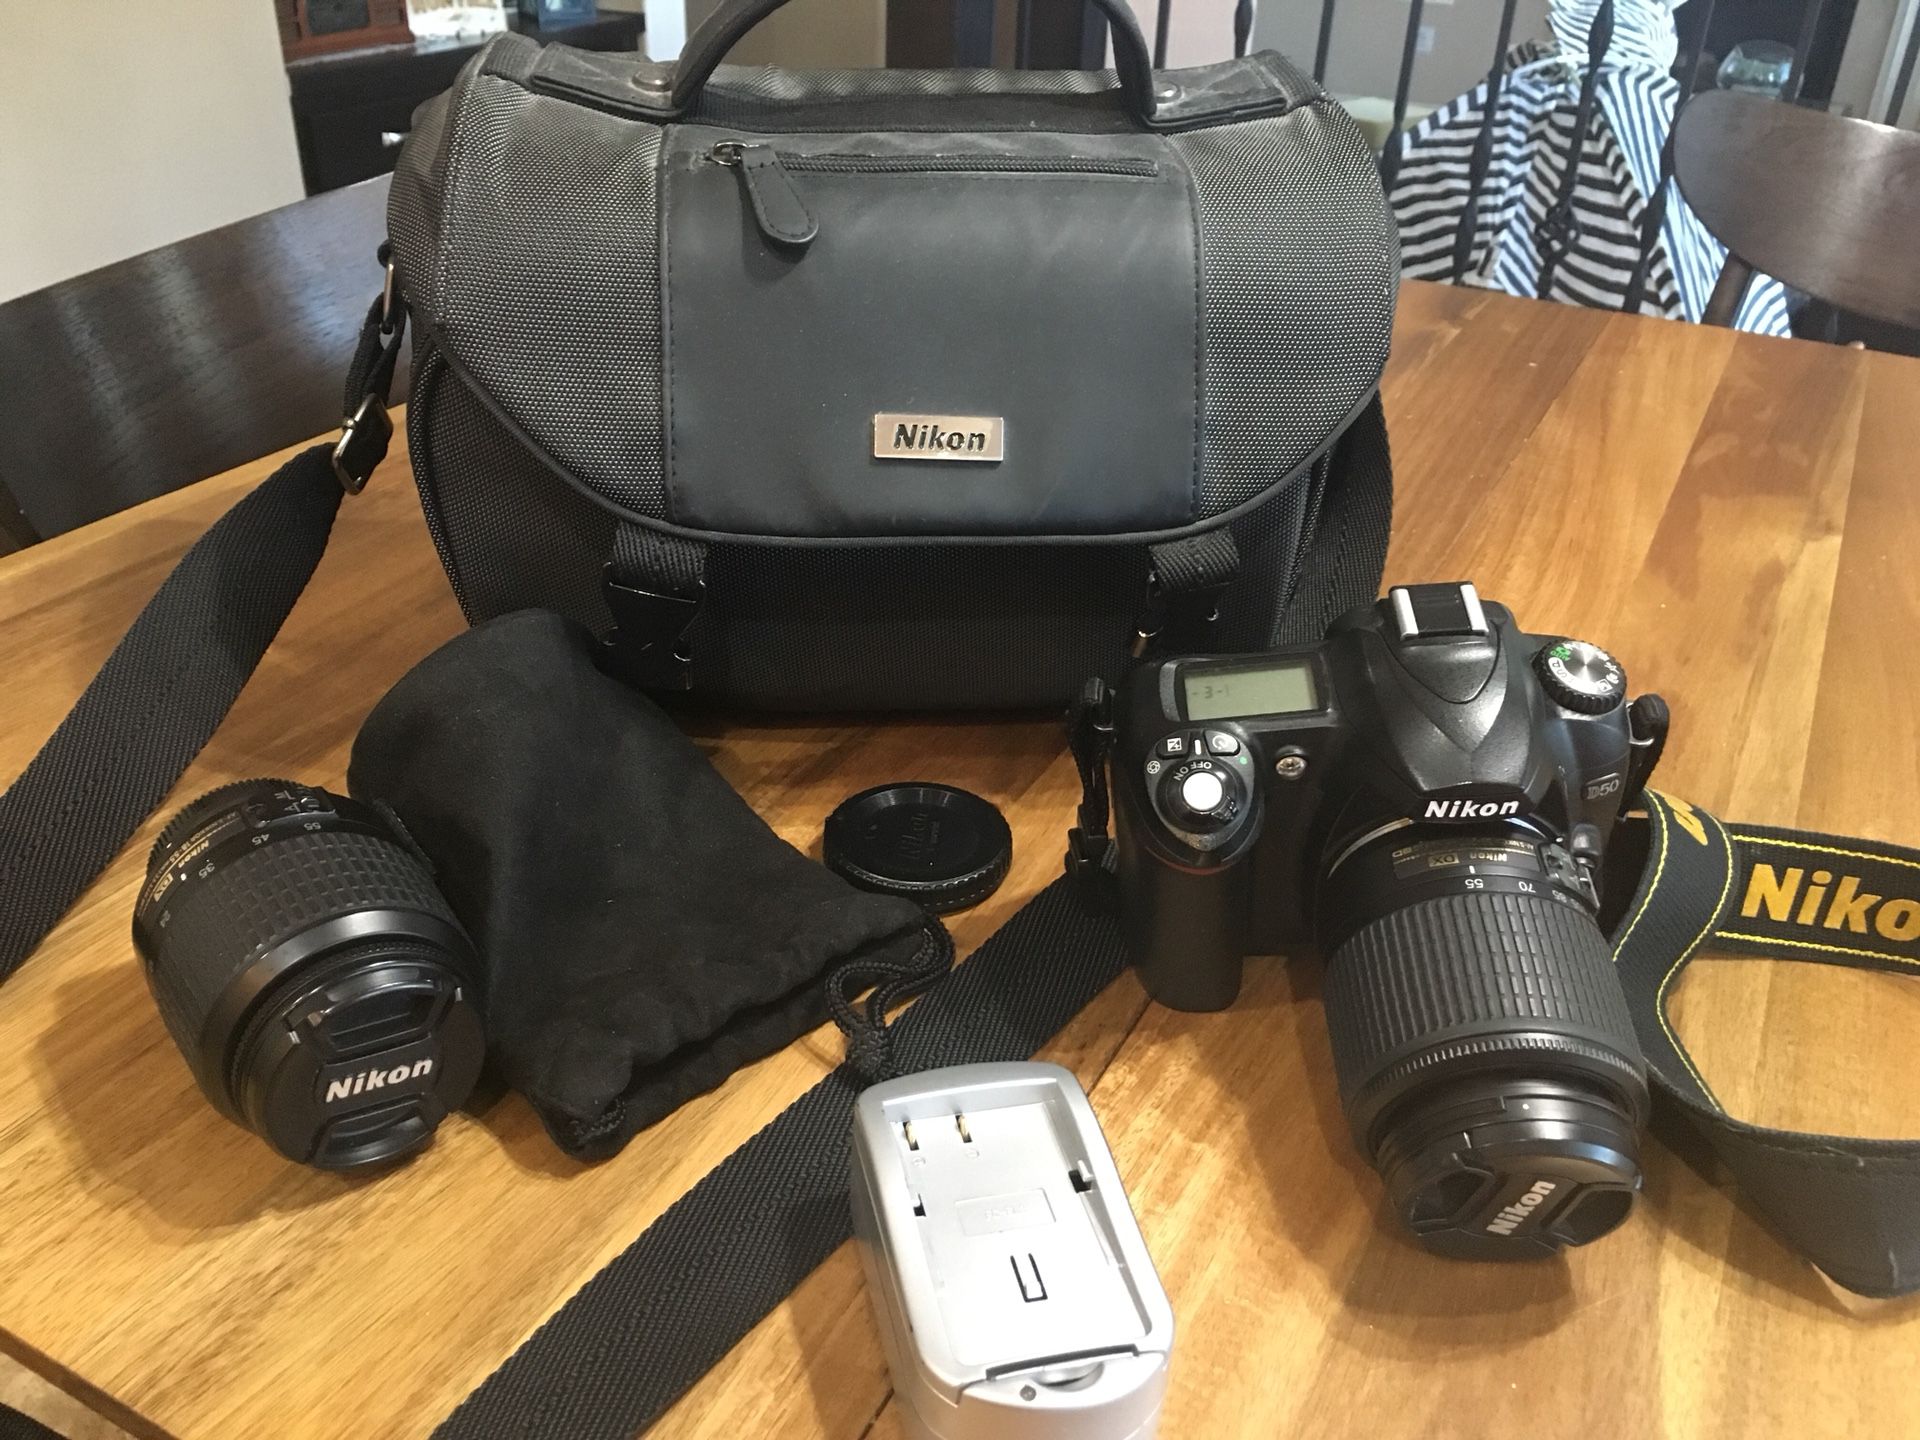 Nikon D50 camera and accessories